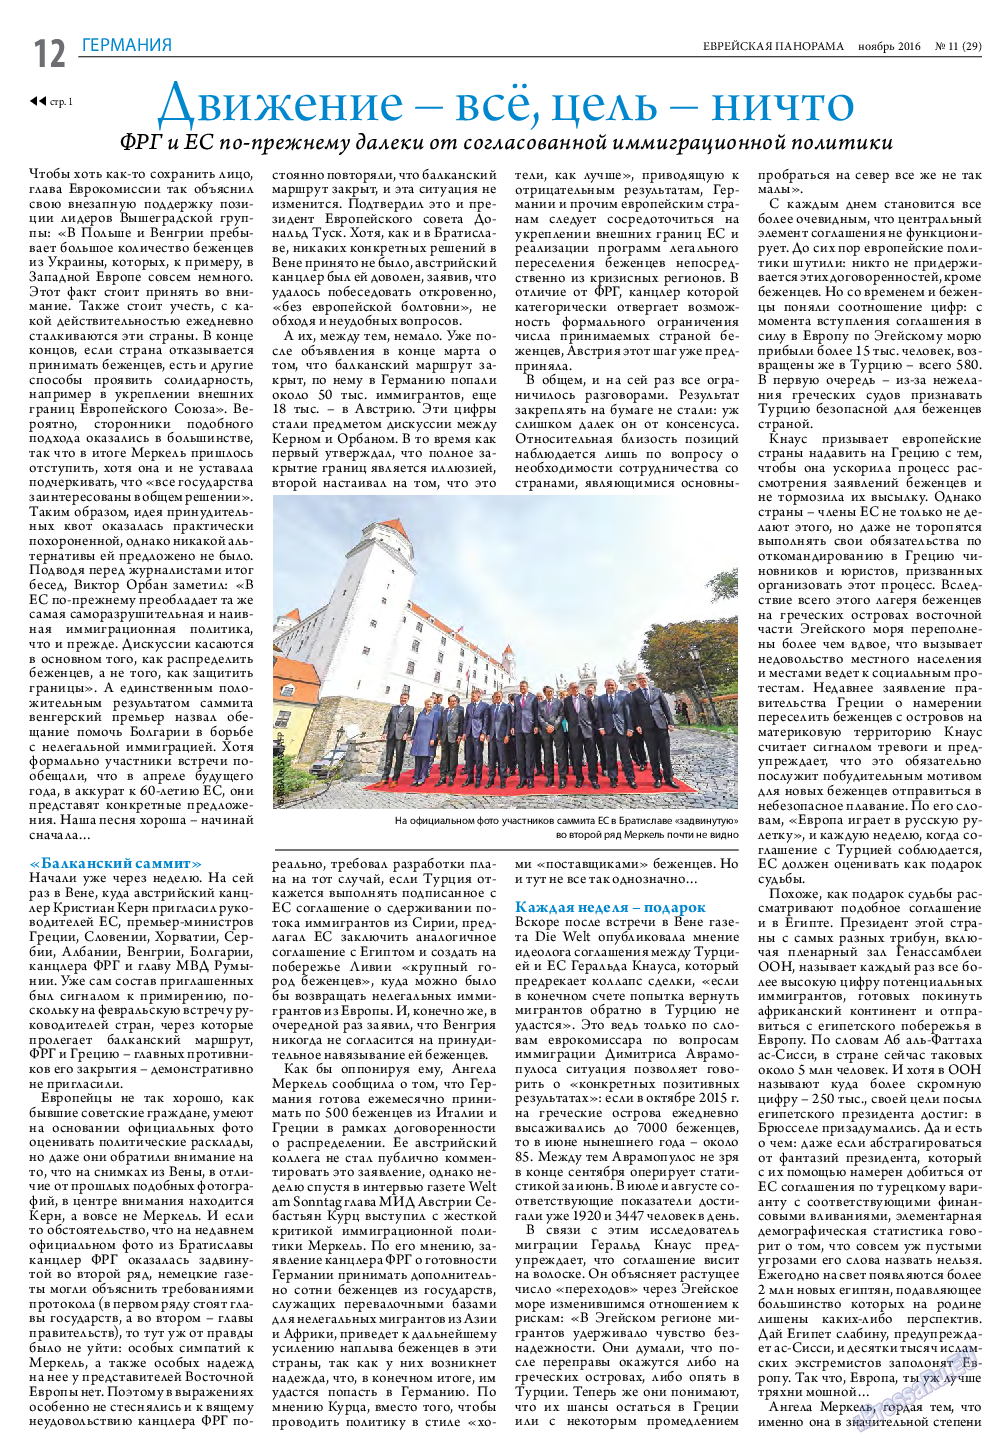 Еврейская панорама, газета. 2016 №11 стр.12